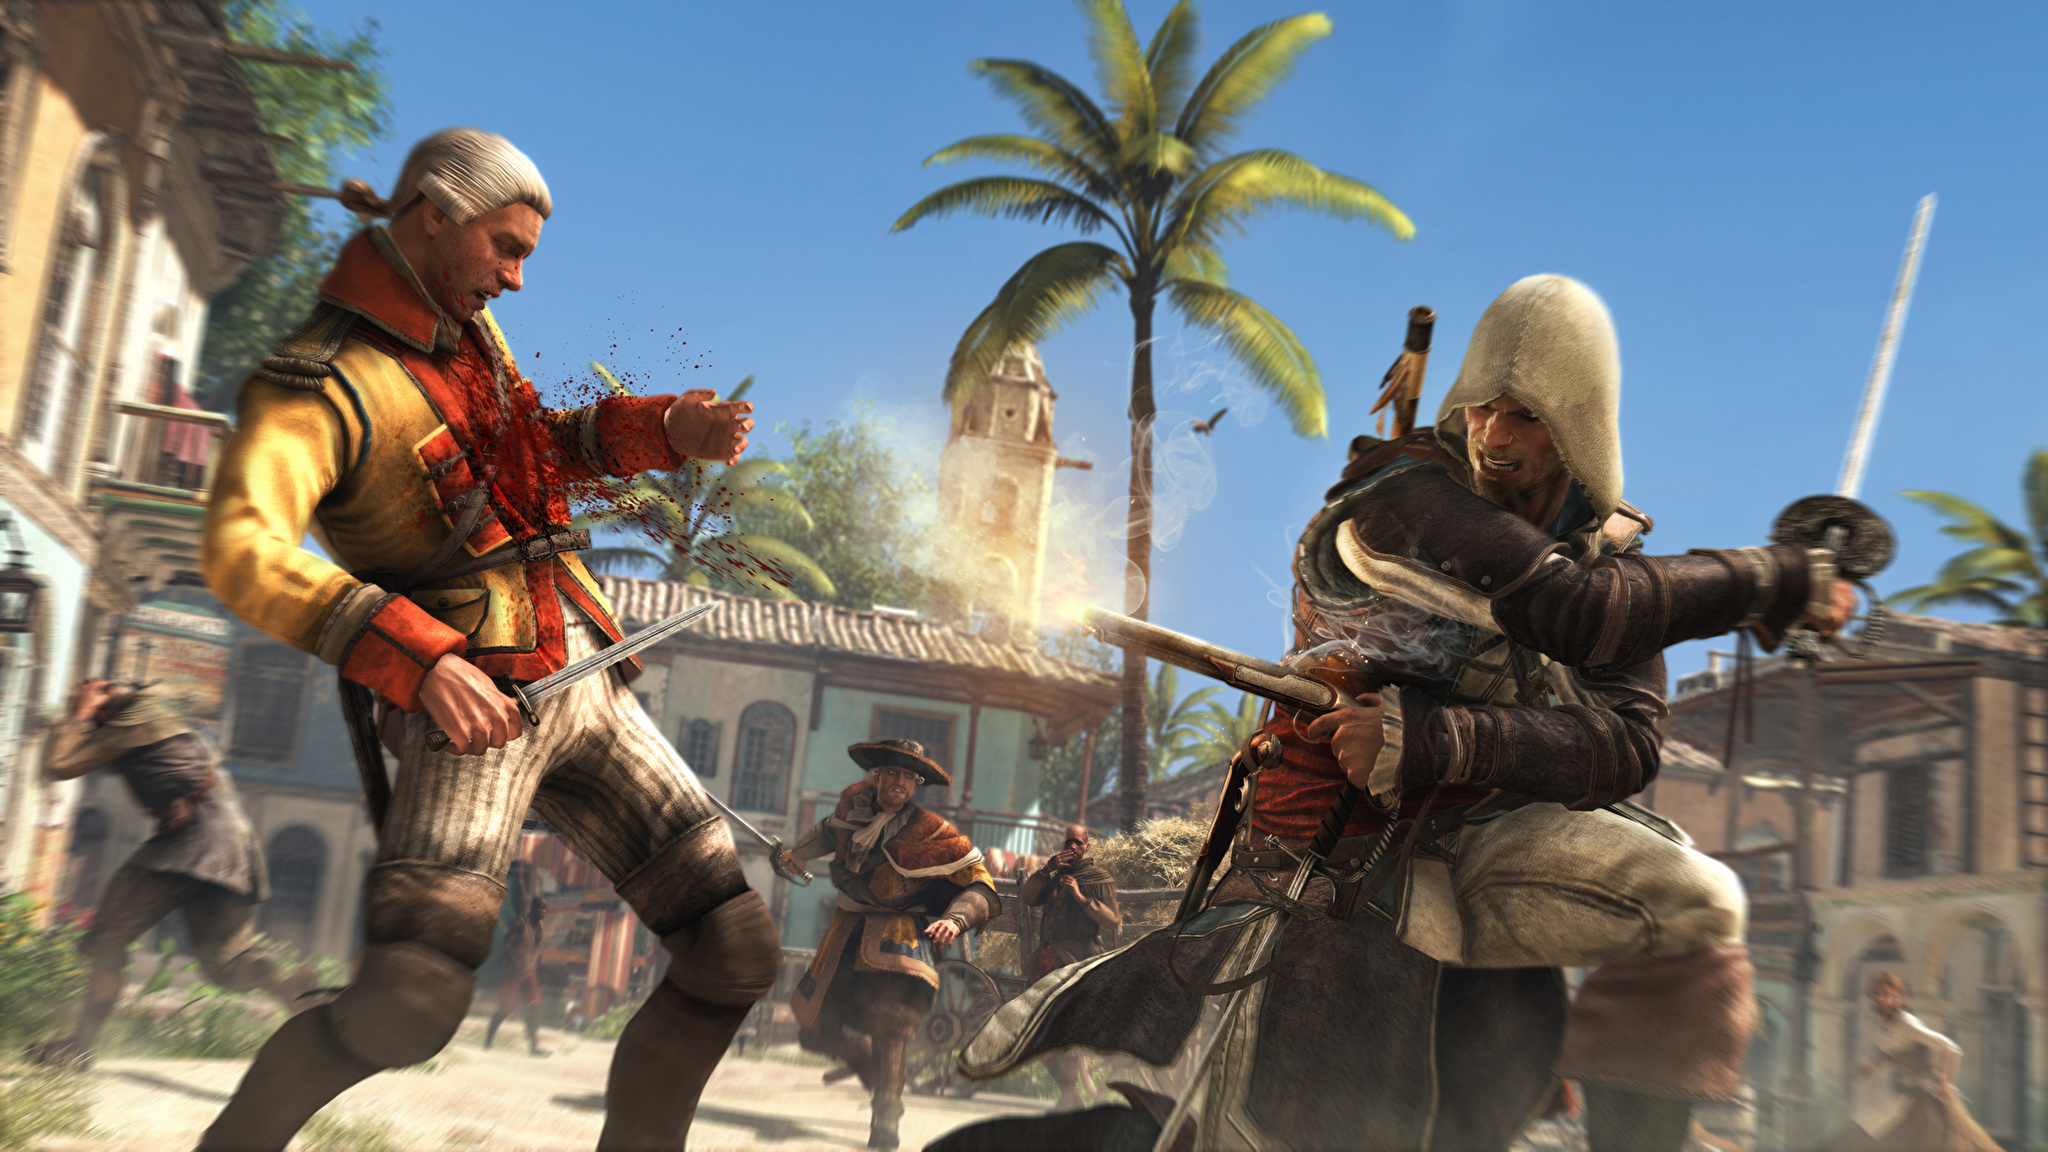 Assasın creed 4. Ассасин Крид 4 черный флаг. Assassin’s Creed IV: Black Flag – 2013. Assassin's Creed 4 Black Flag Скриншоты. AC 4 Black Flag Скриншоты.